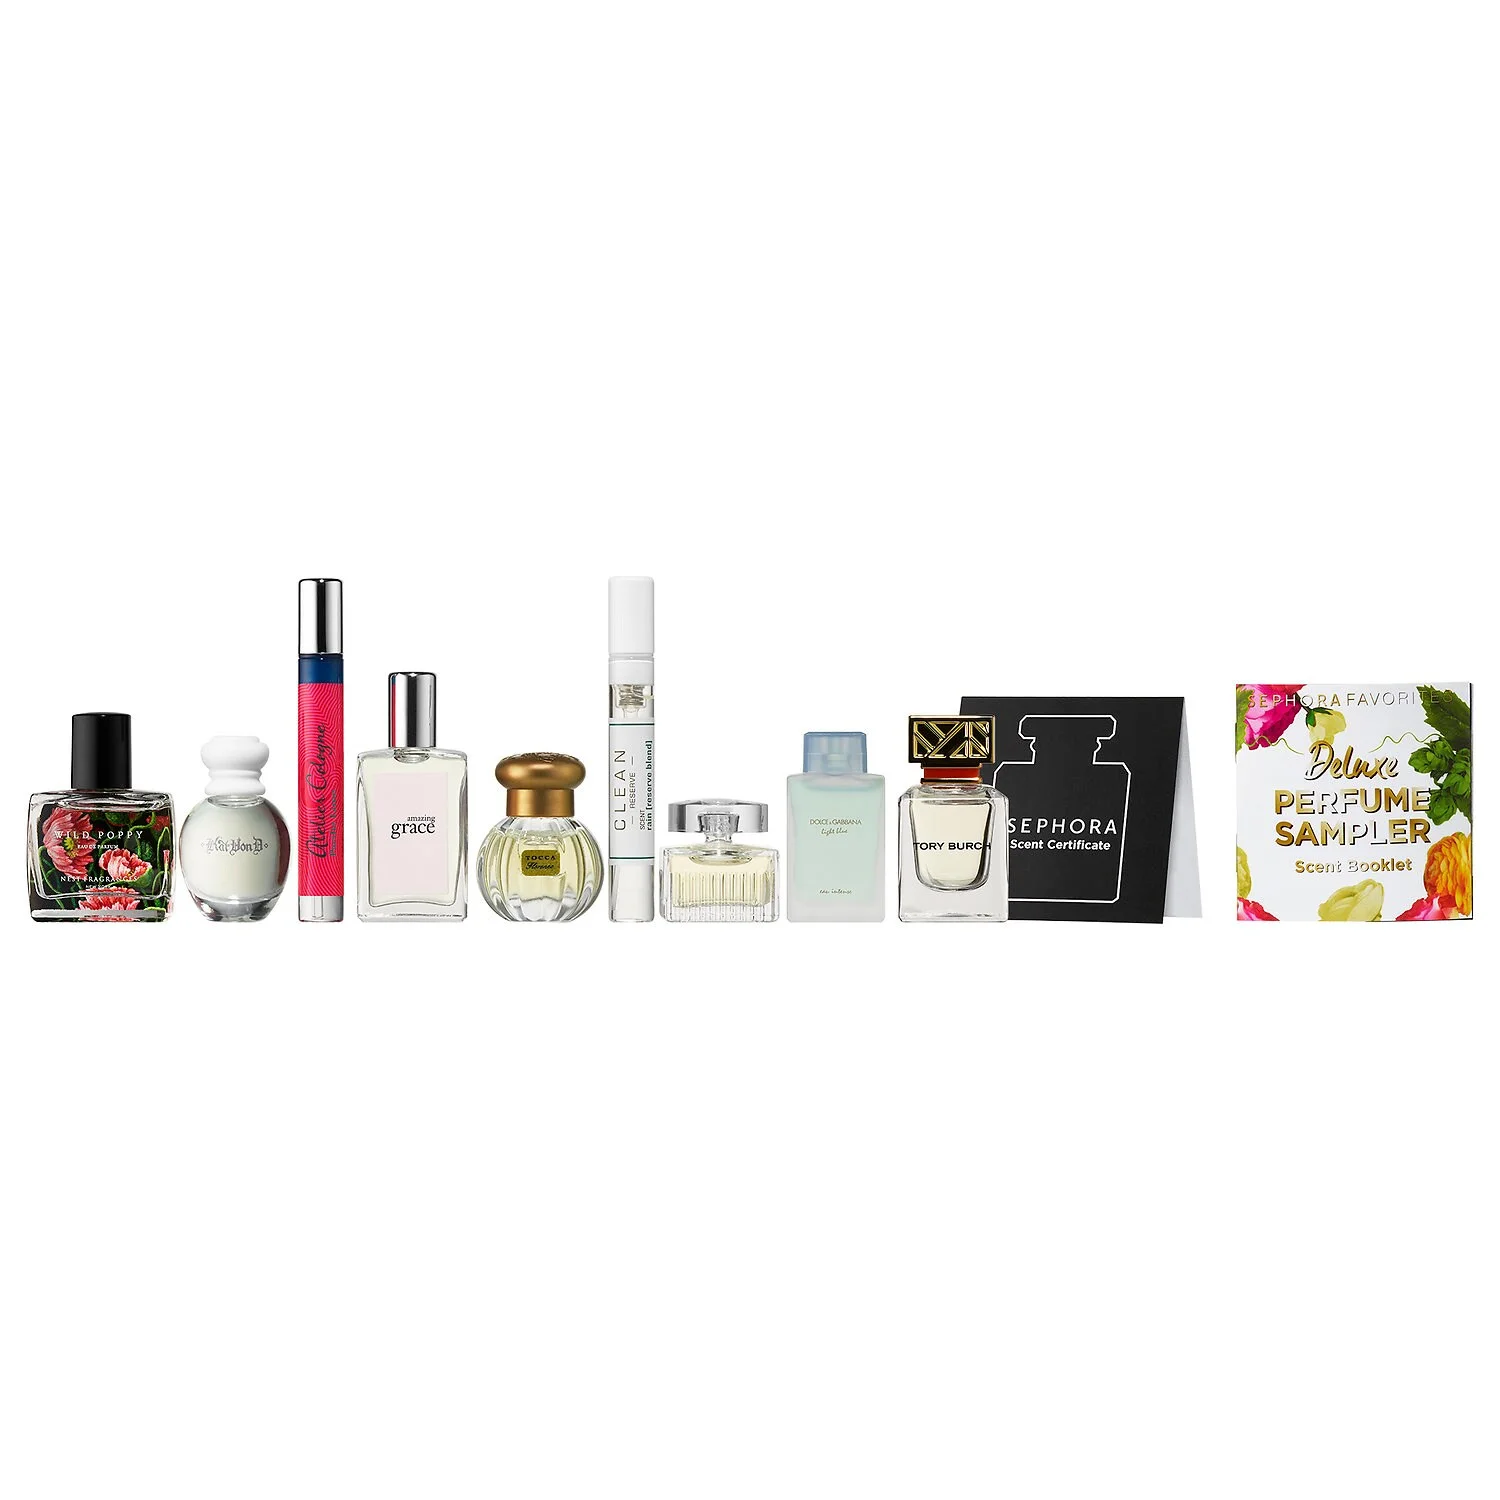 Sephora Favorites Perfume Sampler Set With Voucher